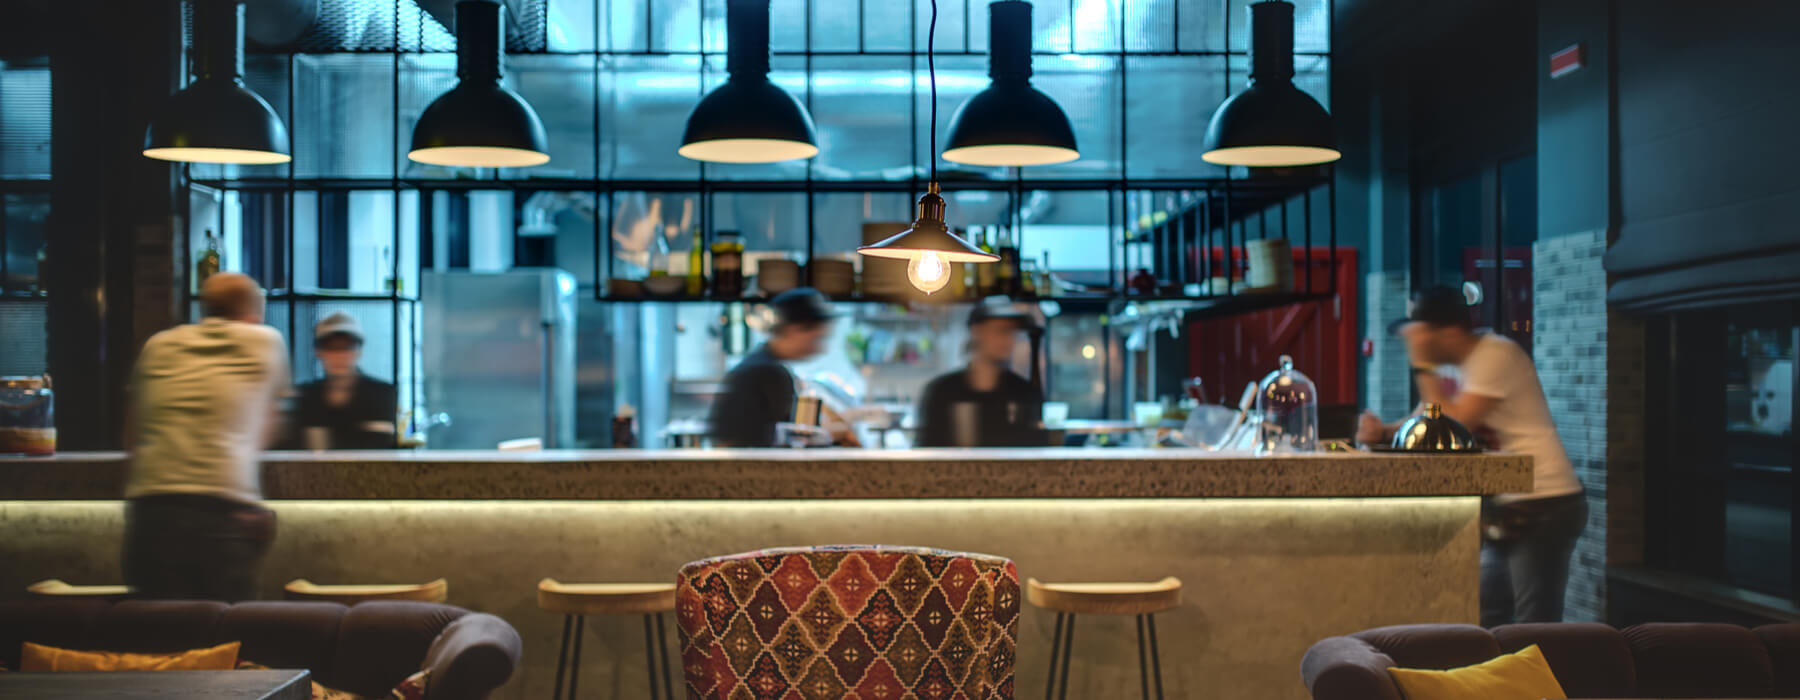 4 Ways To Improve Restaurant Designs with Adequate Lighting